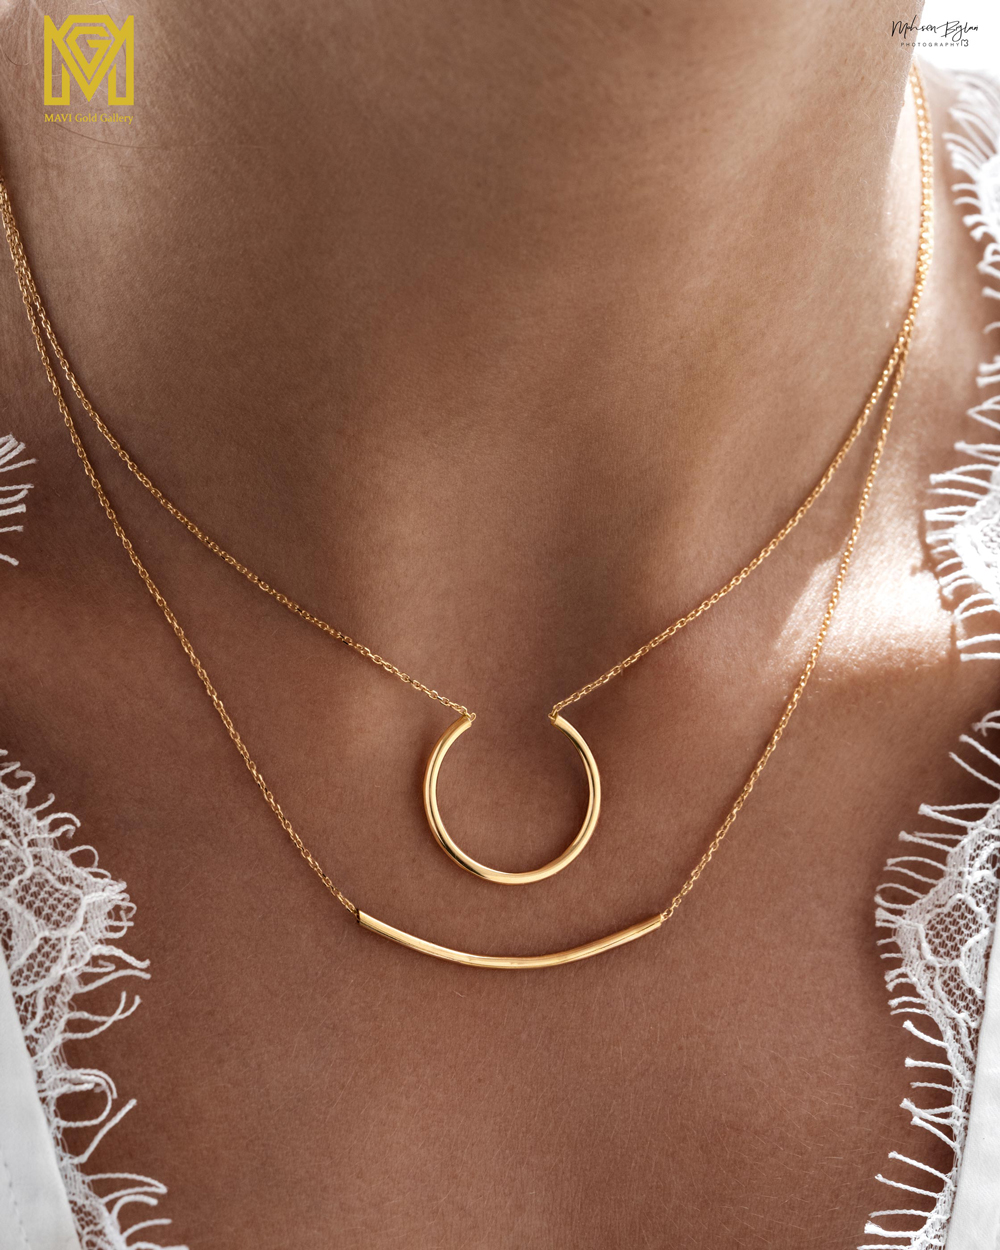 mavigoldgallery_necklaces-kamand-model